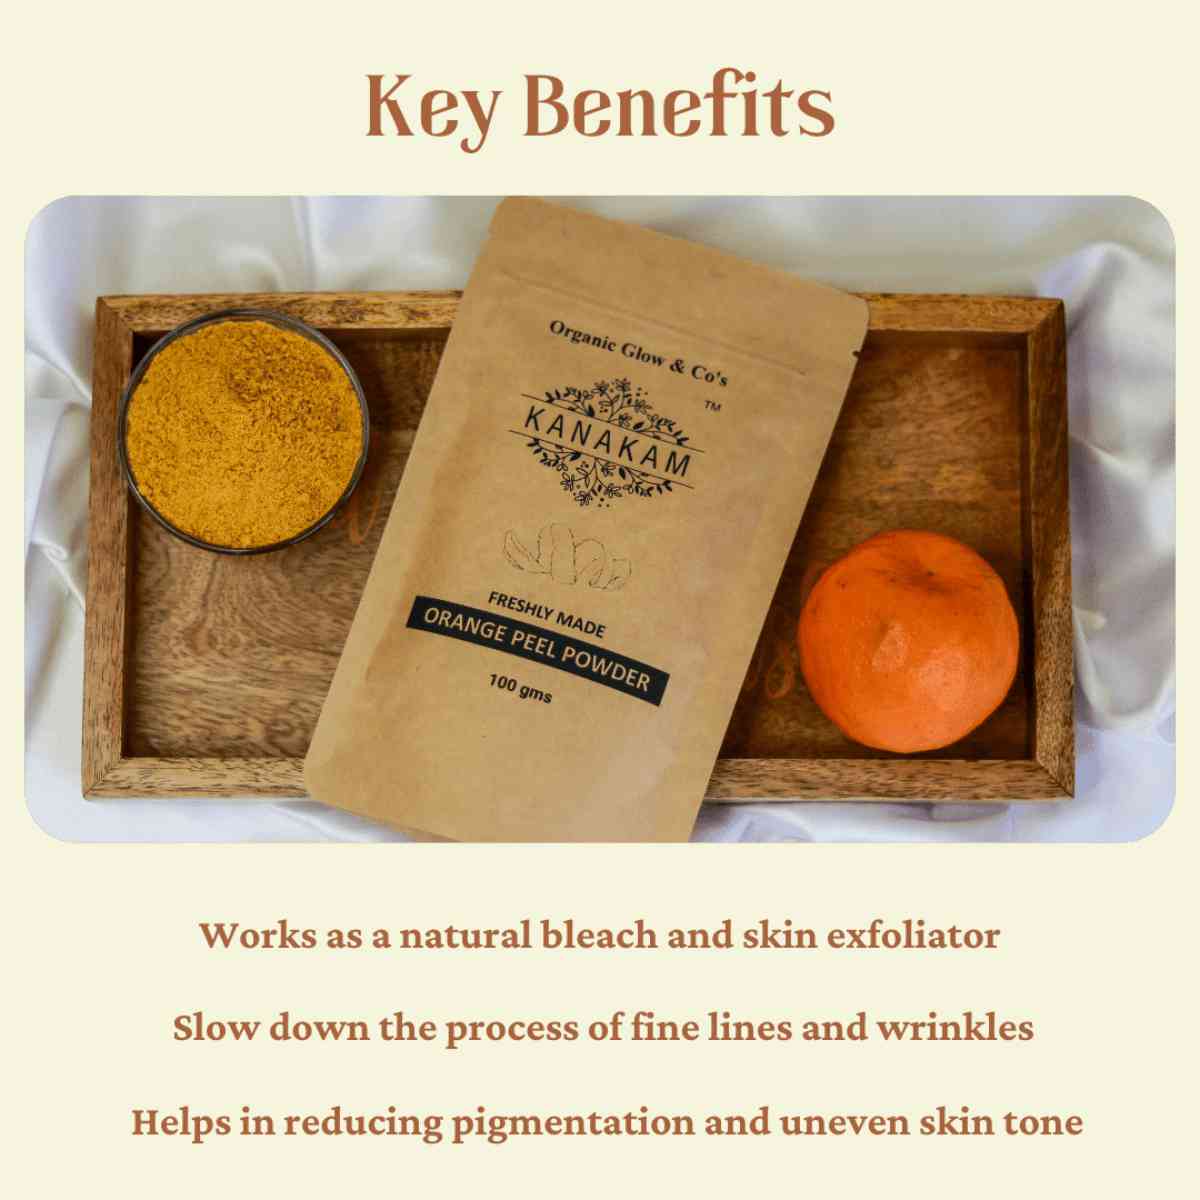 Kanakam Natural Orange Peel Powder key benefits